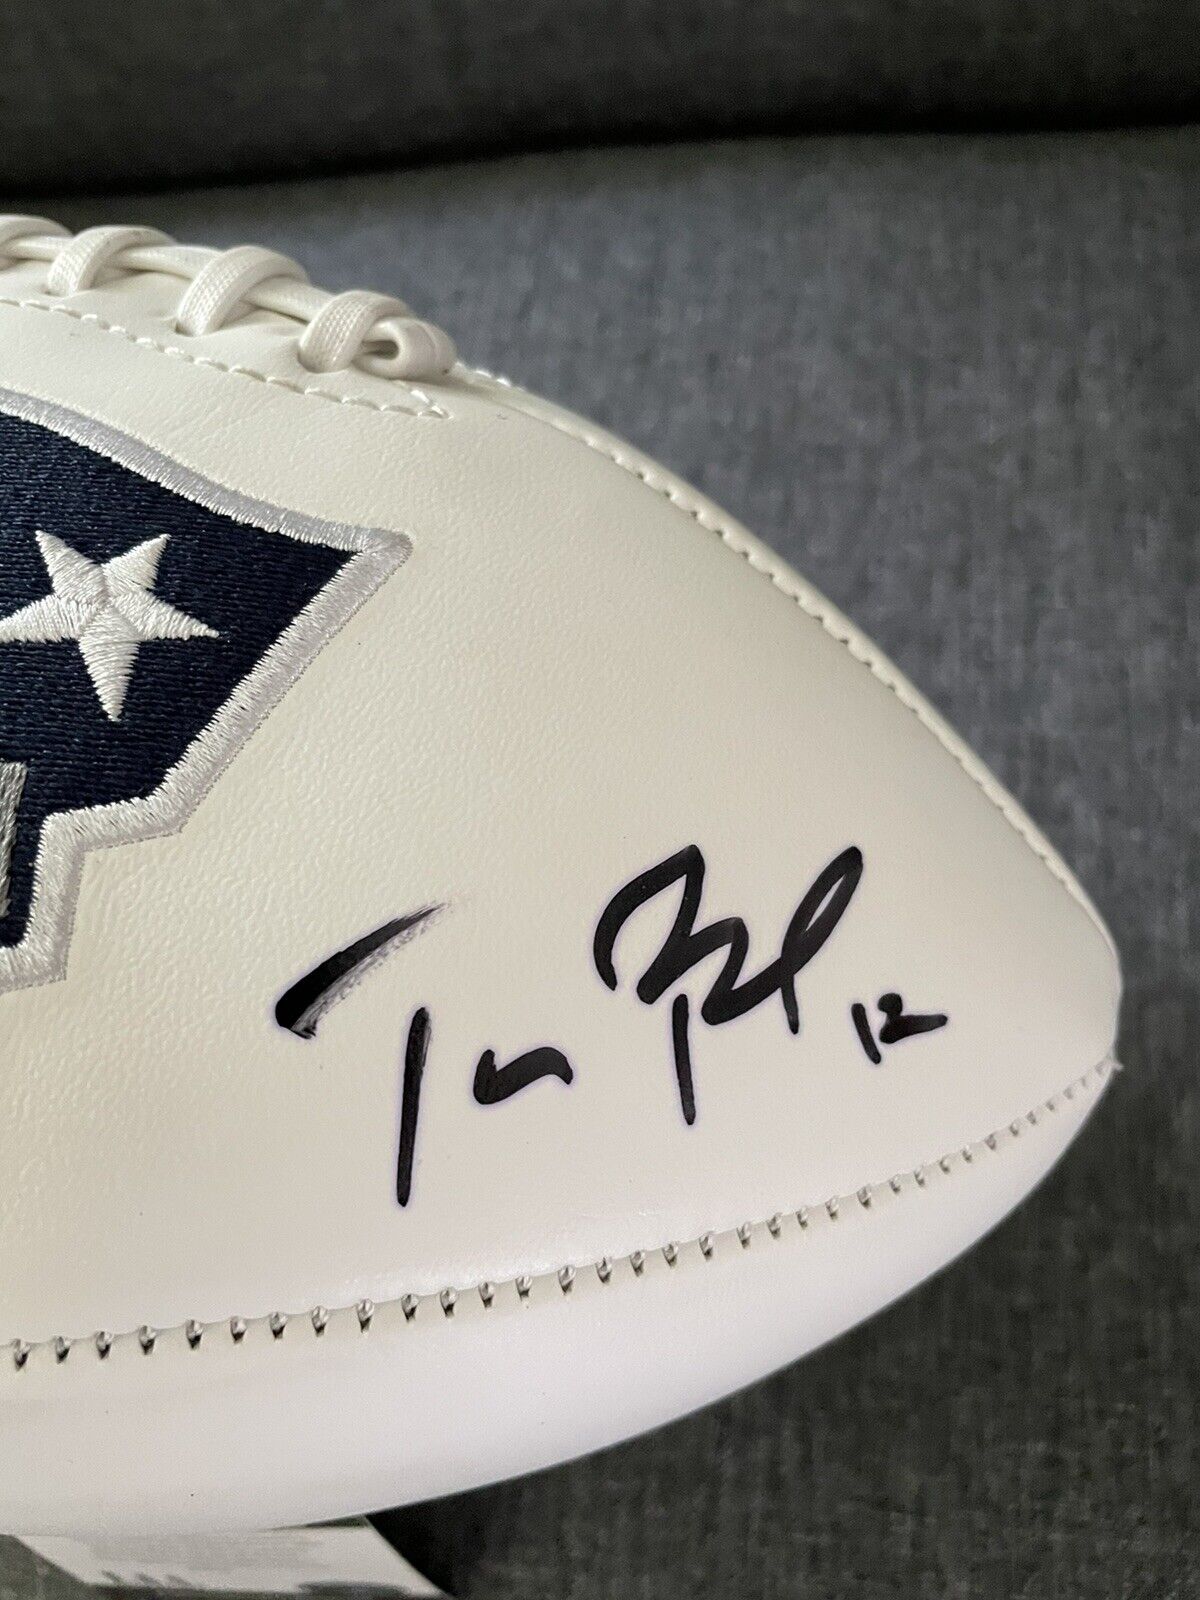 Tom Brady Limited Edition 2002 New England Patriots Signed Football. Afc